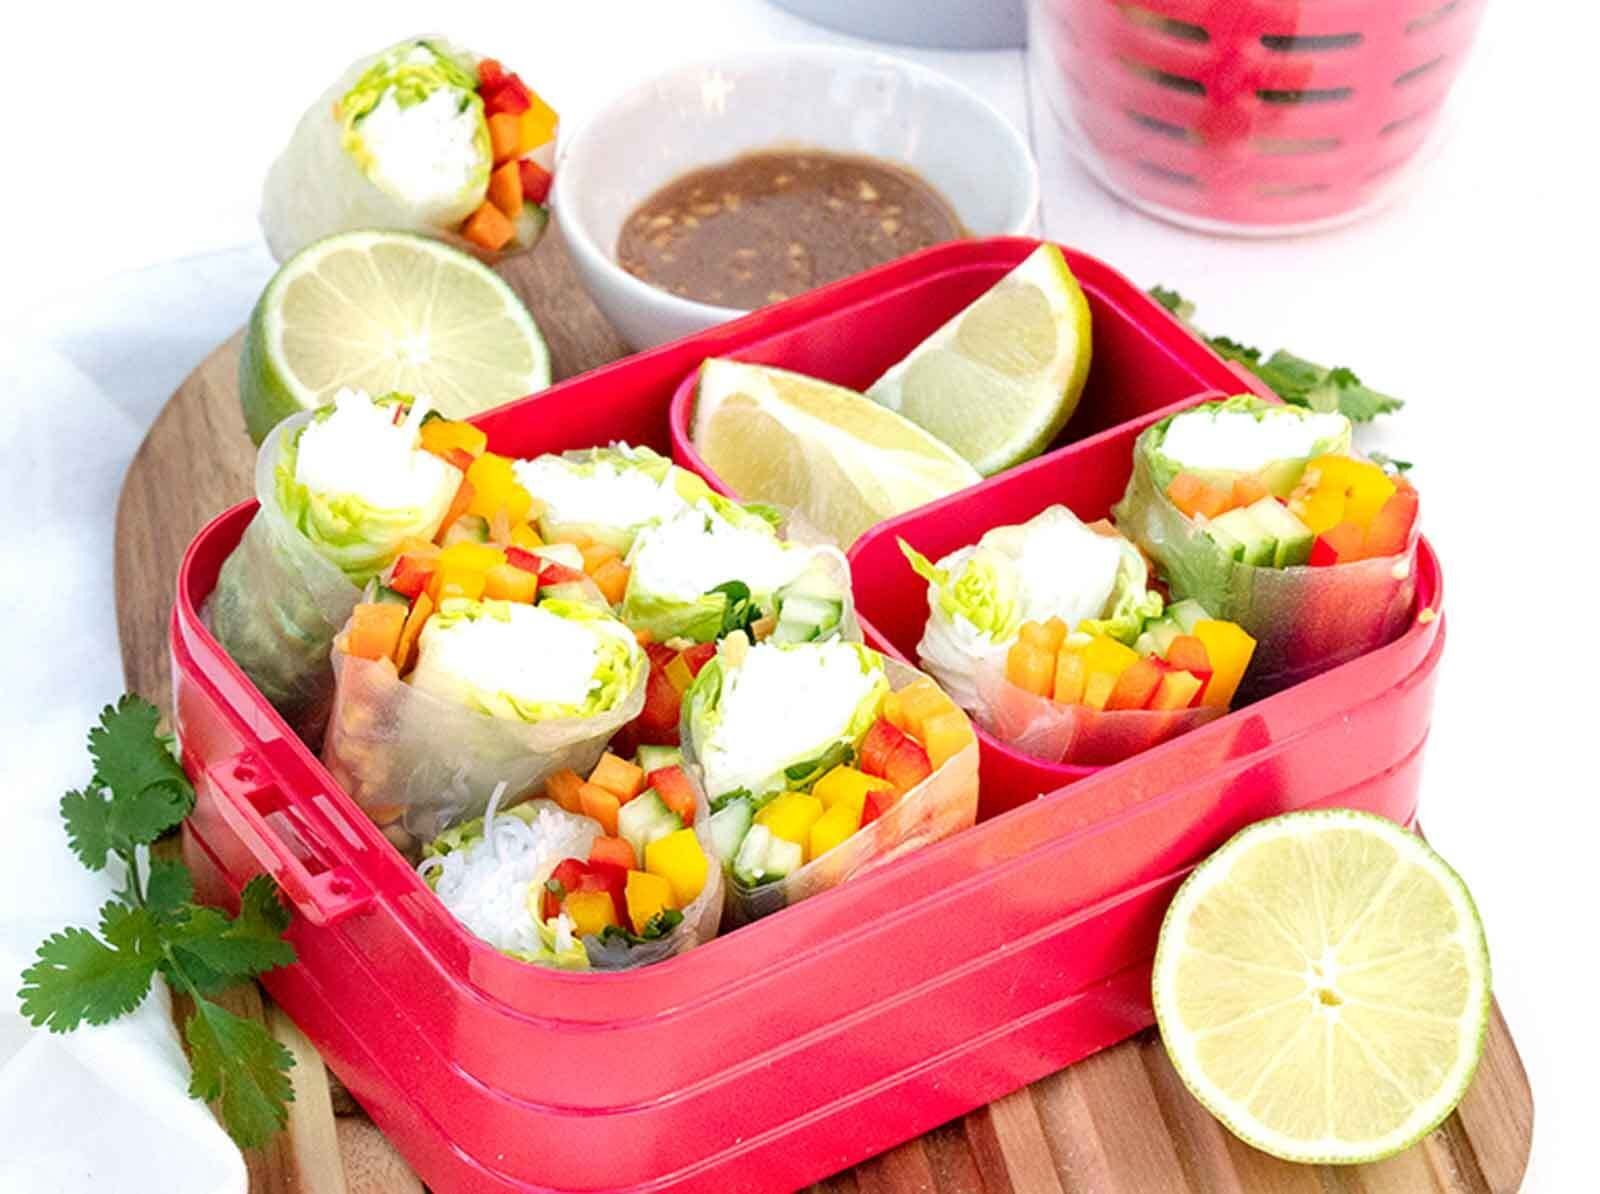 Mepal Lunchbox Ellipse + Kunststoff, Green Nordic TAB Bento-Brotdose Set, 2er Lunchpot + Spülmaschinengeeignet (2-tlg)